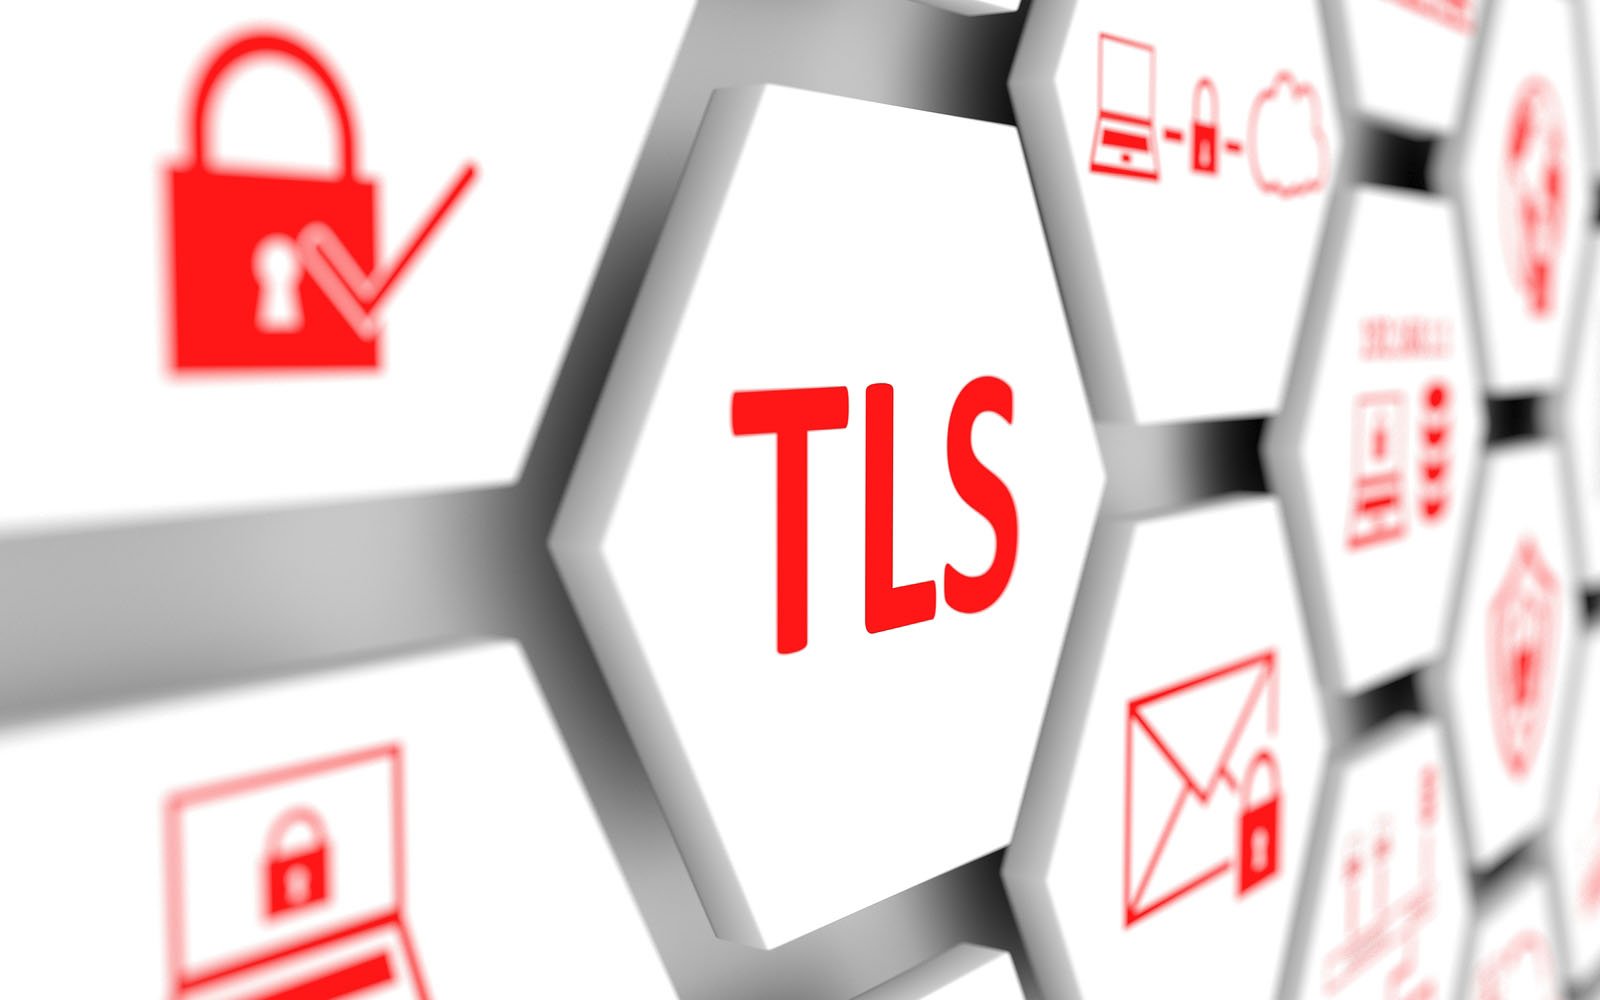 Transport Layer Security (TLS)